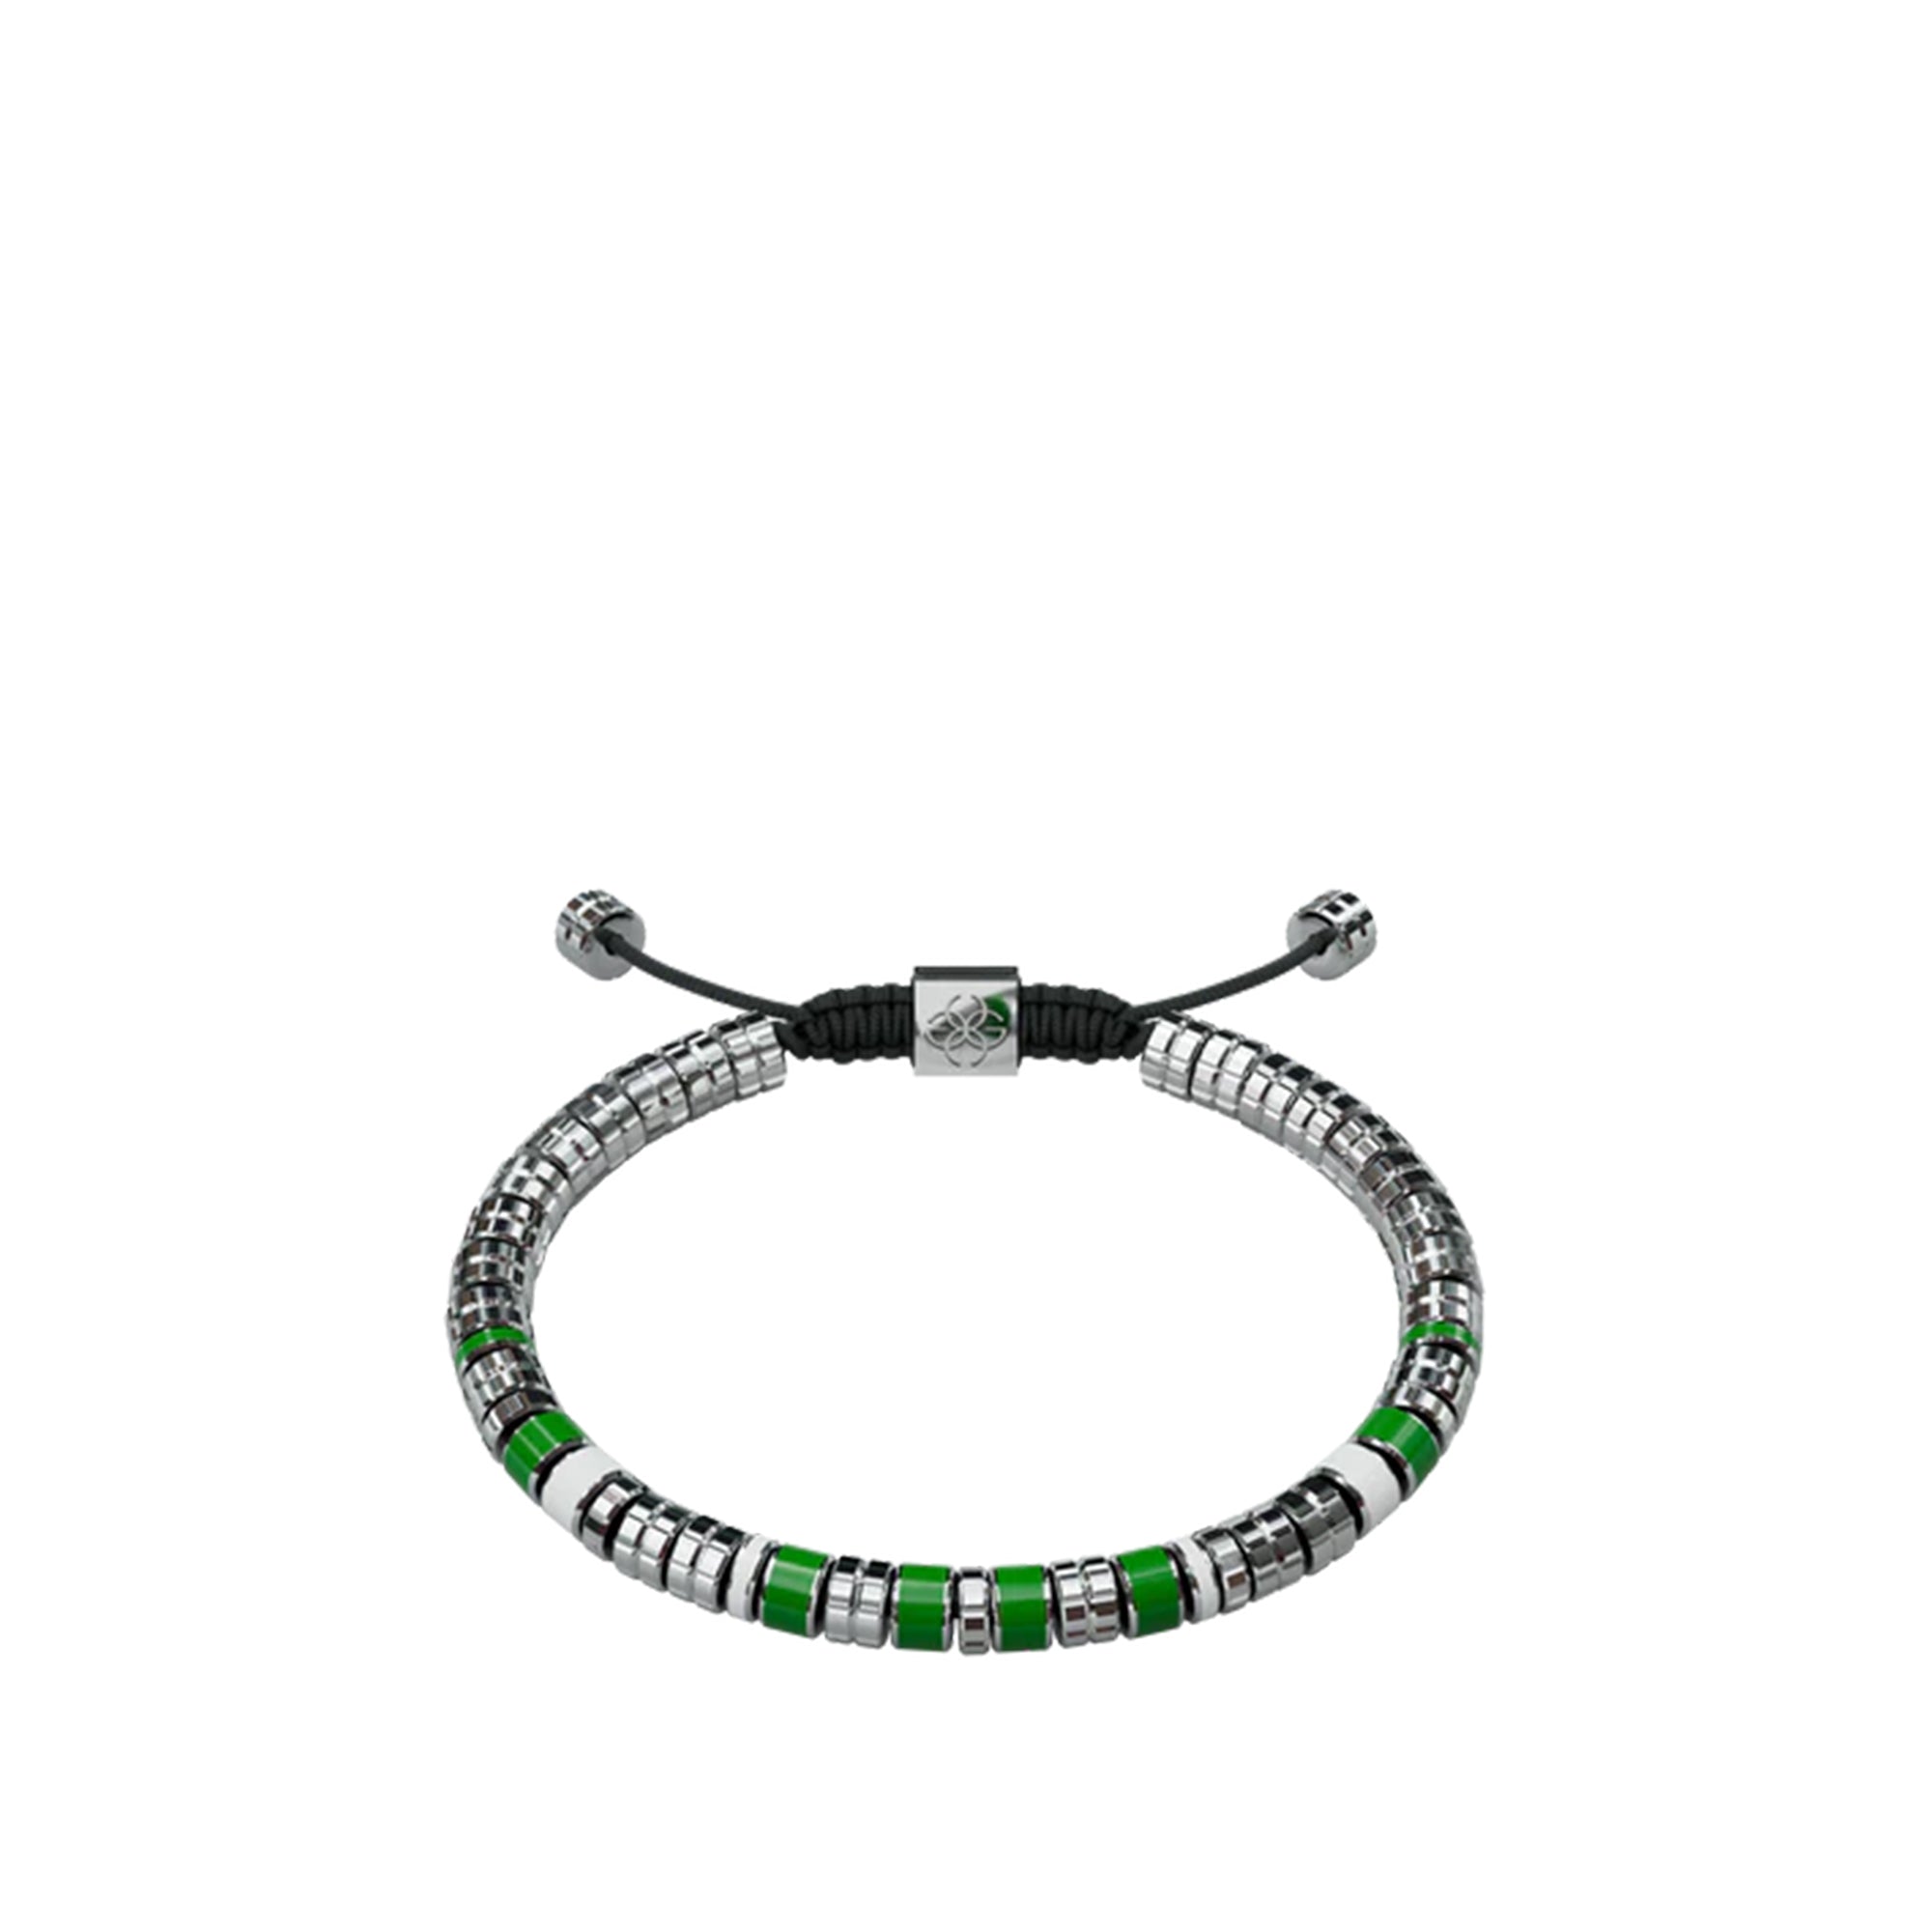 Golden Concept Bracelet Silver/ Green/ White 19cm/ Large